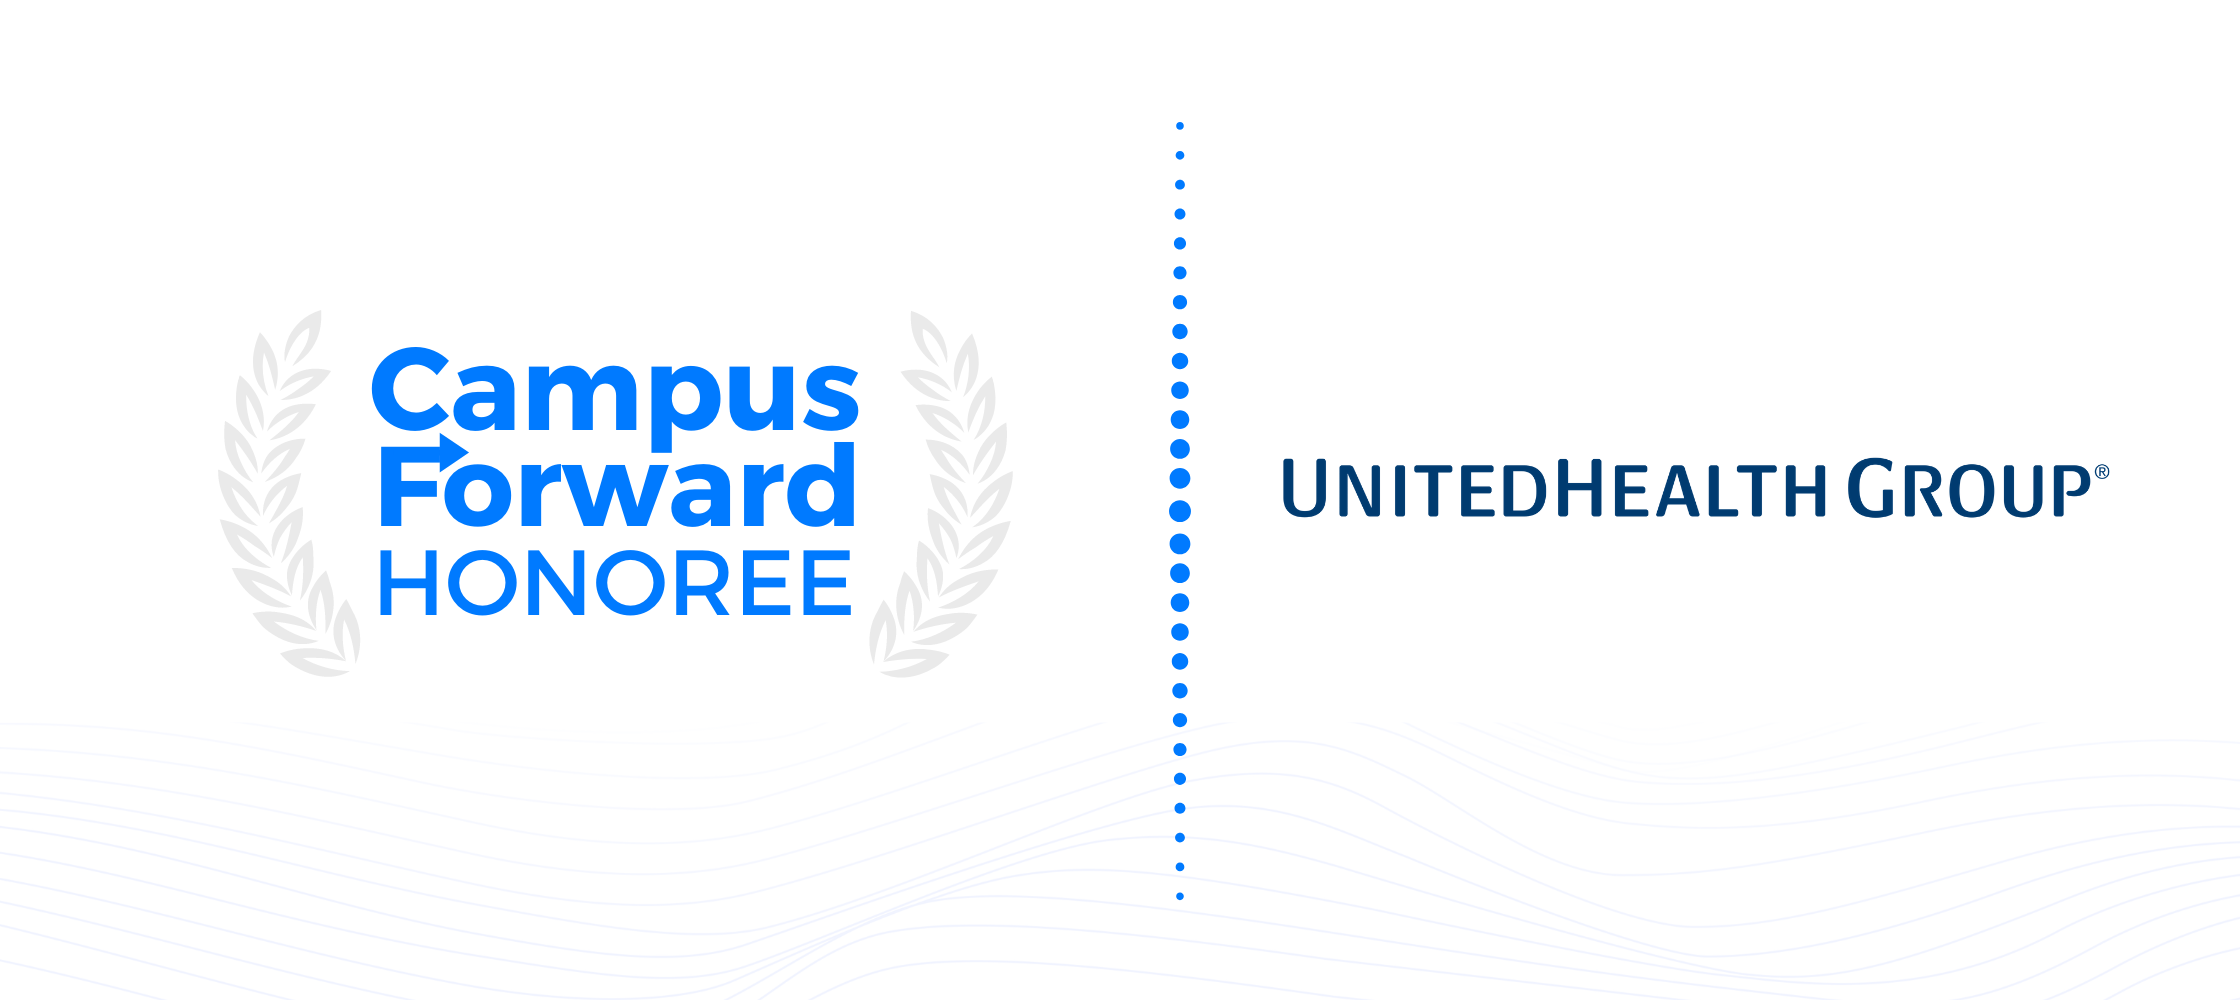 Campus Forward Honoree - UnitedHealth Group